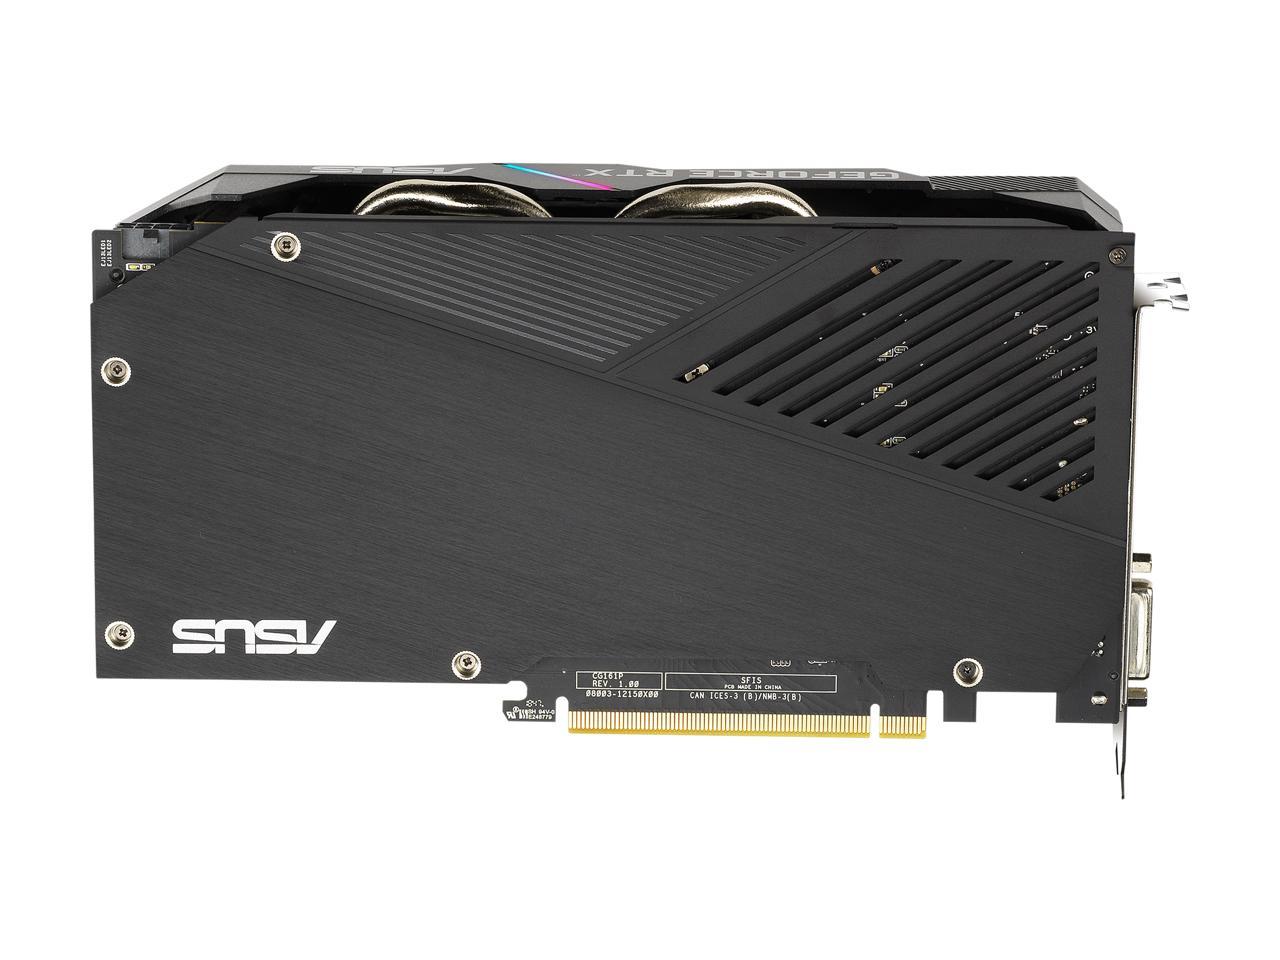 ASUS Dual GeForce RTX 2060 EVO OC Edition (PCIe 3.0, 12 Go GDDR6, HDMI, DisplayPort, DVI-D, ventilateur Axial-tech, technologie 0dB, Auto-Extreme)